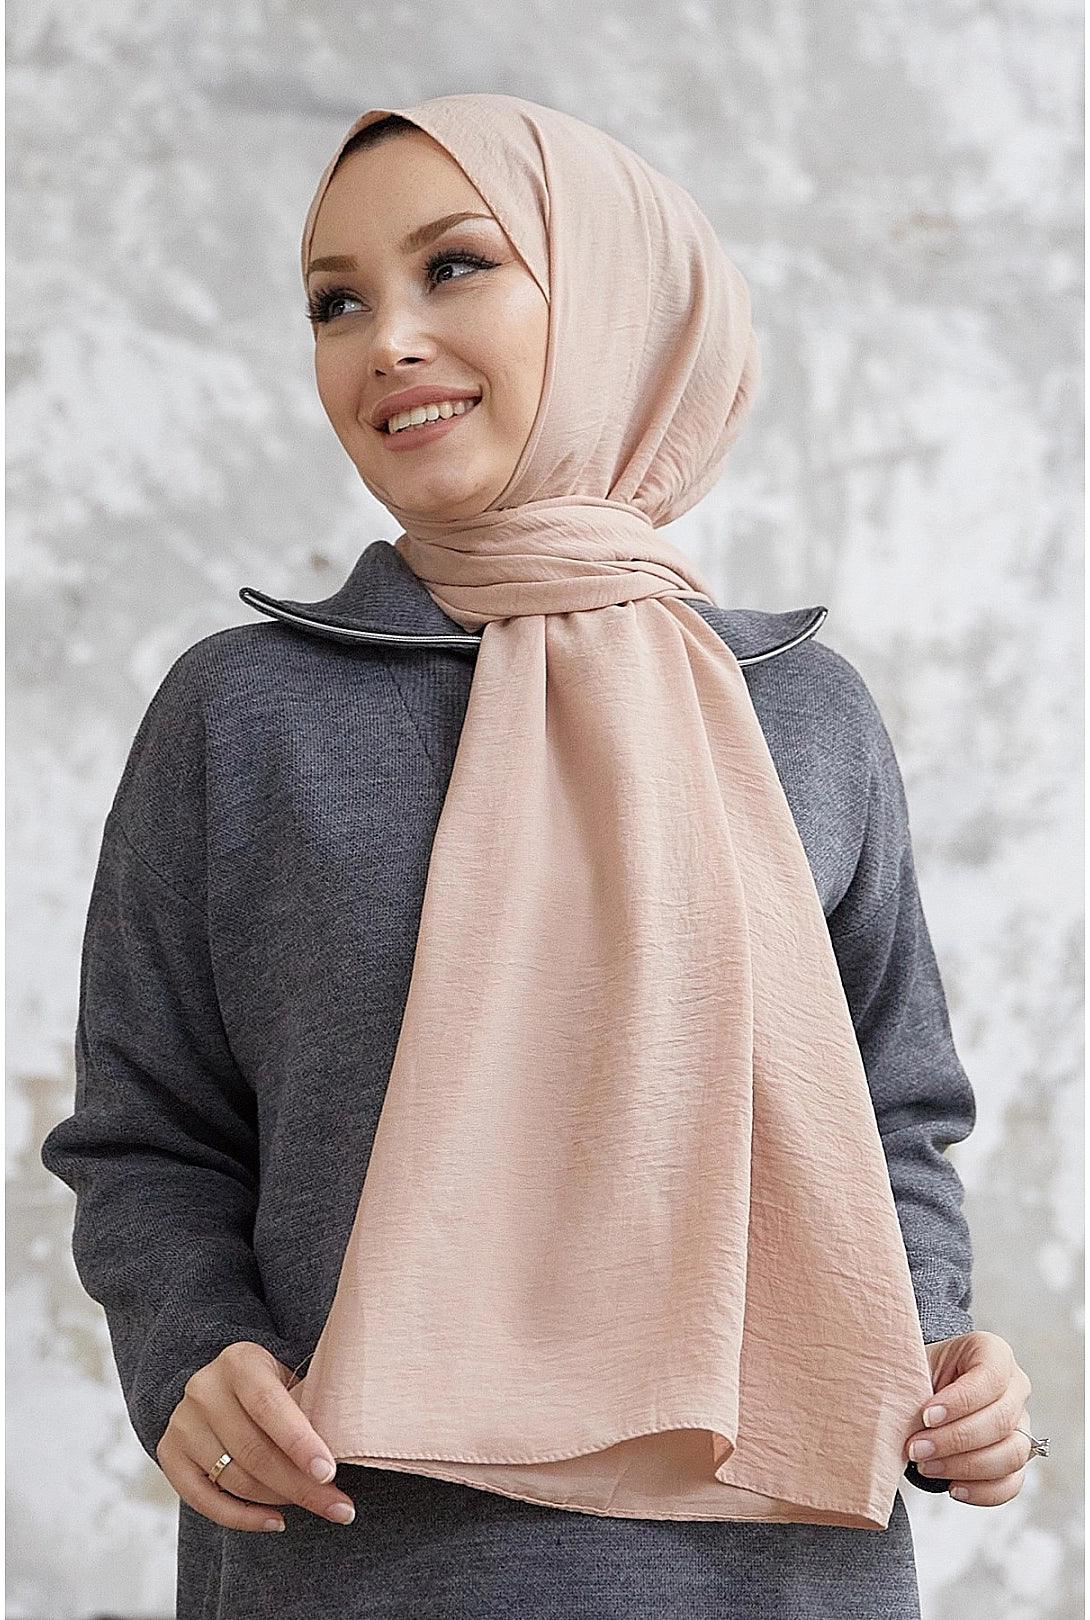 Jazz Muslim Hijab Scarf for Women - Rosy Brown